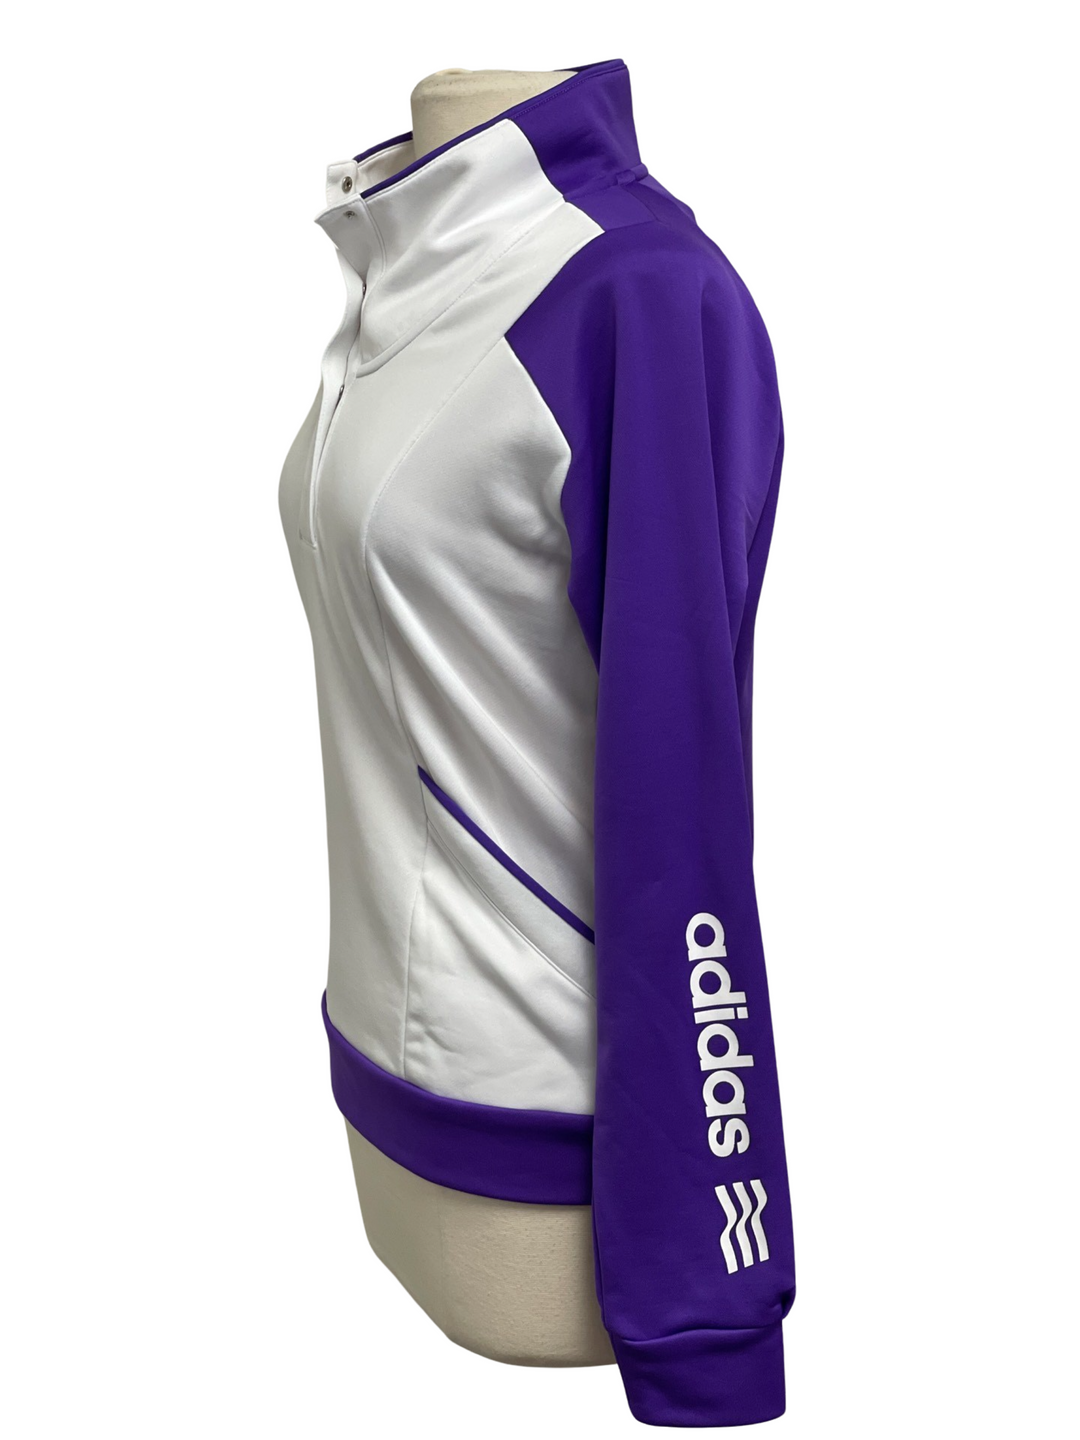 Adidas Pullover - White/Purple - Large - Skorzie